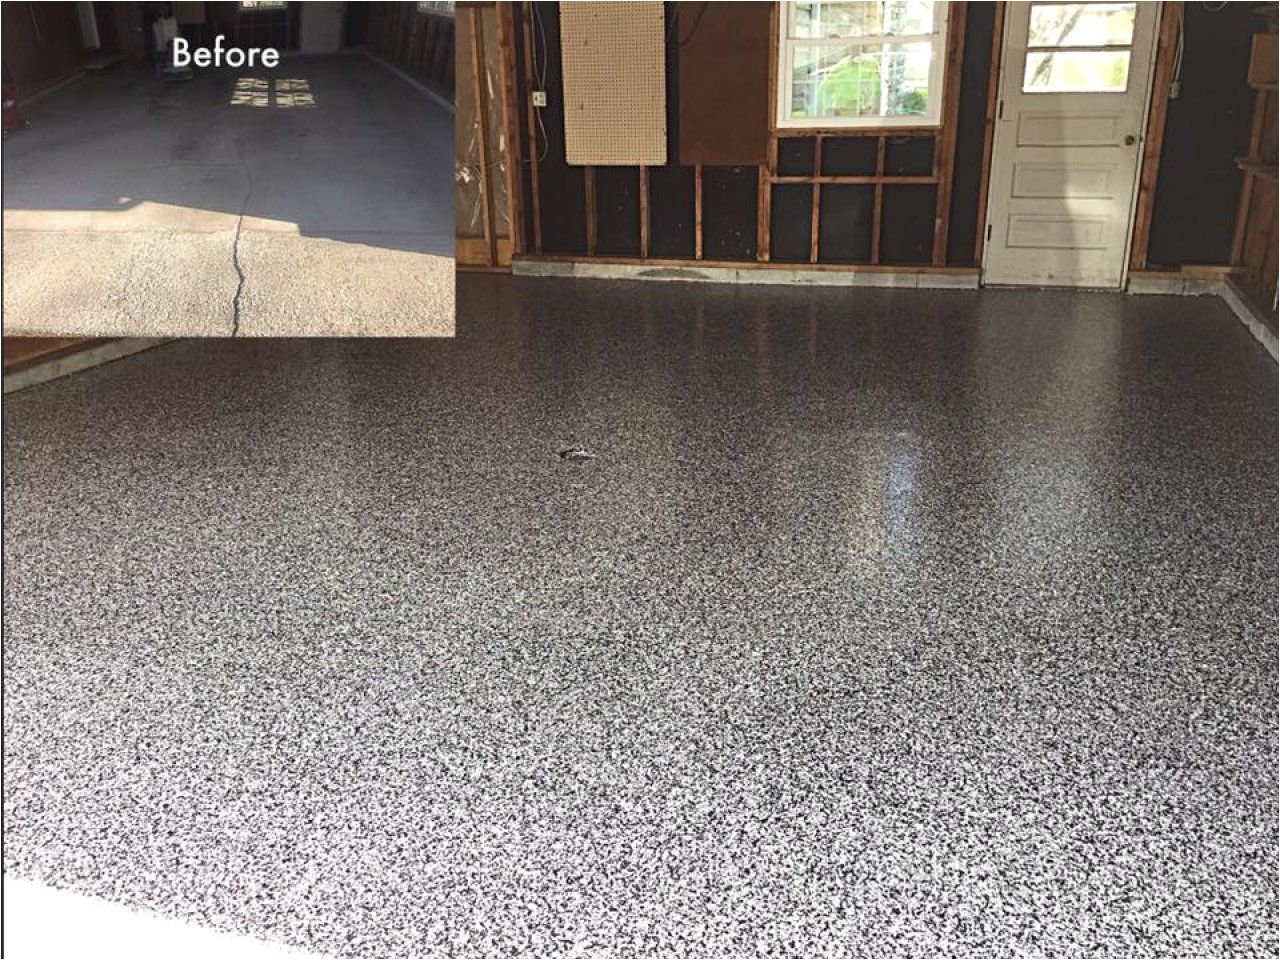 Asphalt Floor Tiles before and after Picture Of Graniflex Garage Flooring In Findlay